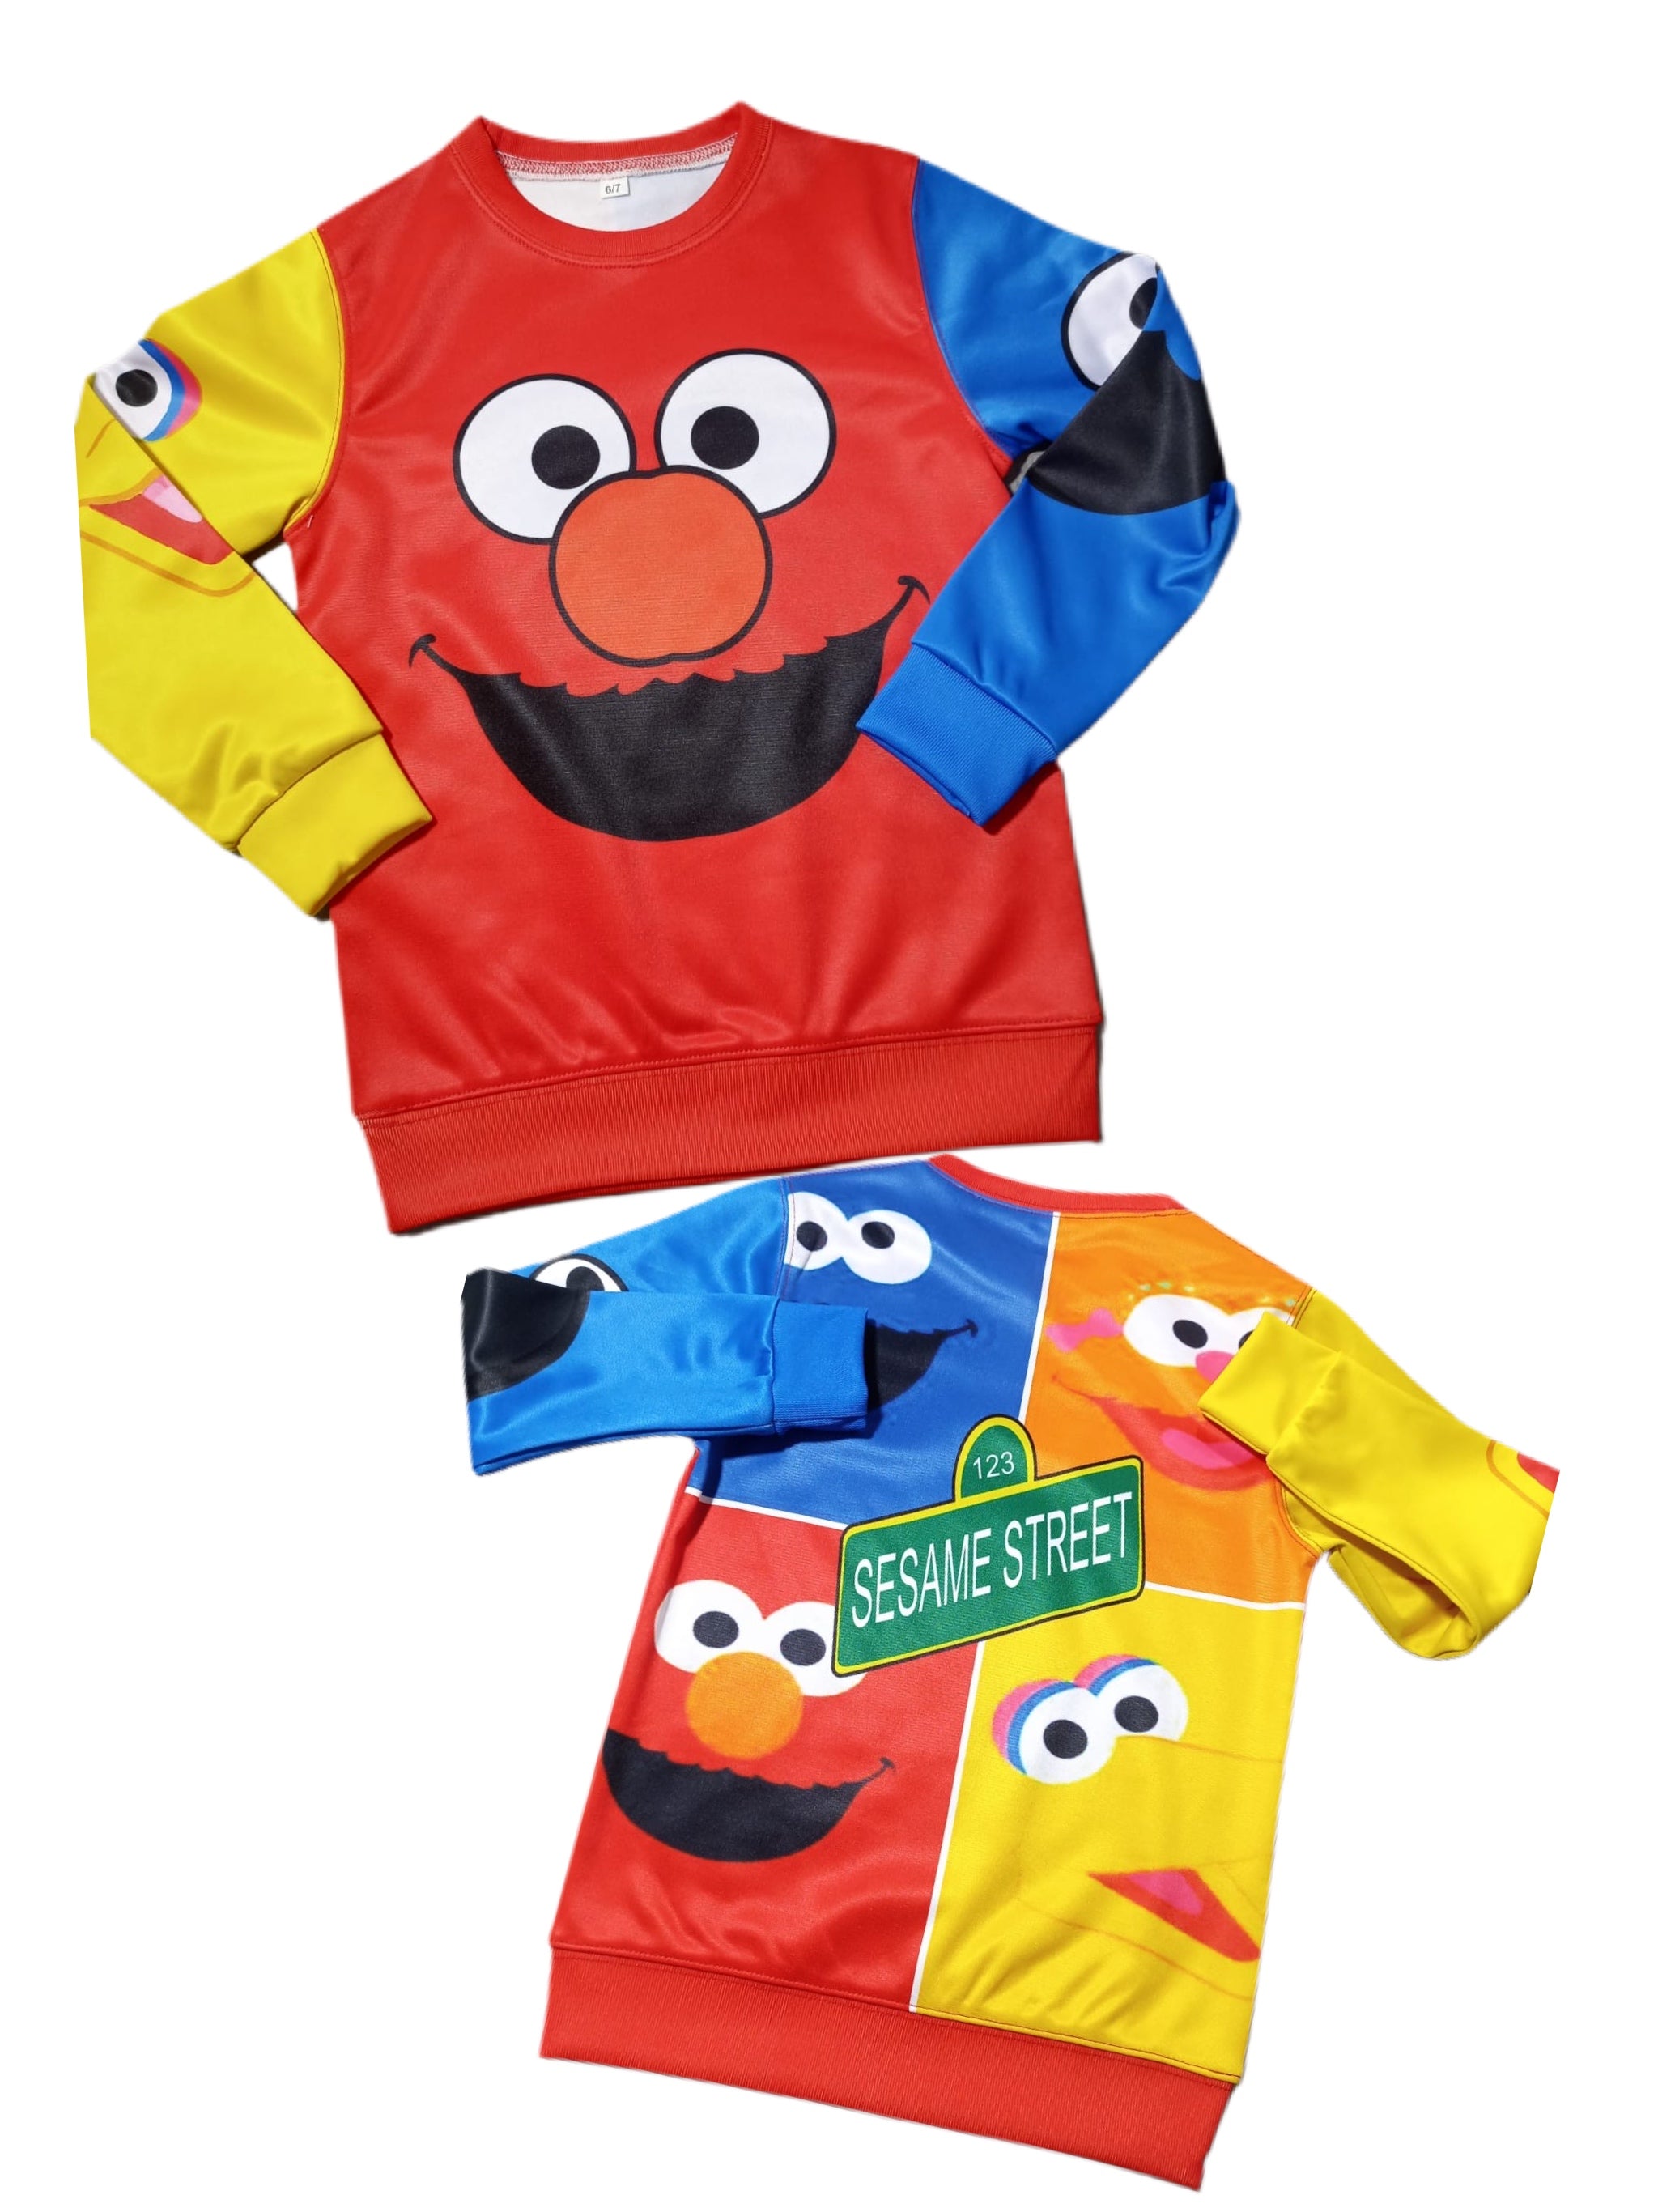 Kids Elmo sweater